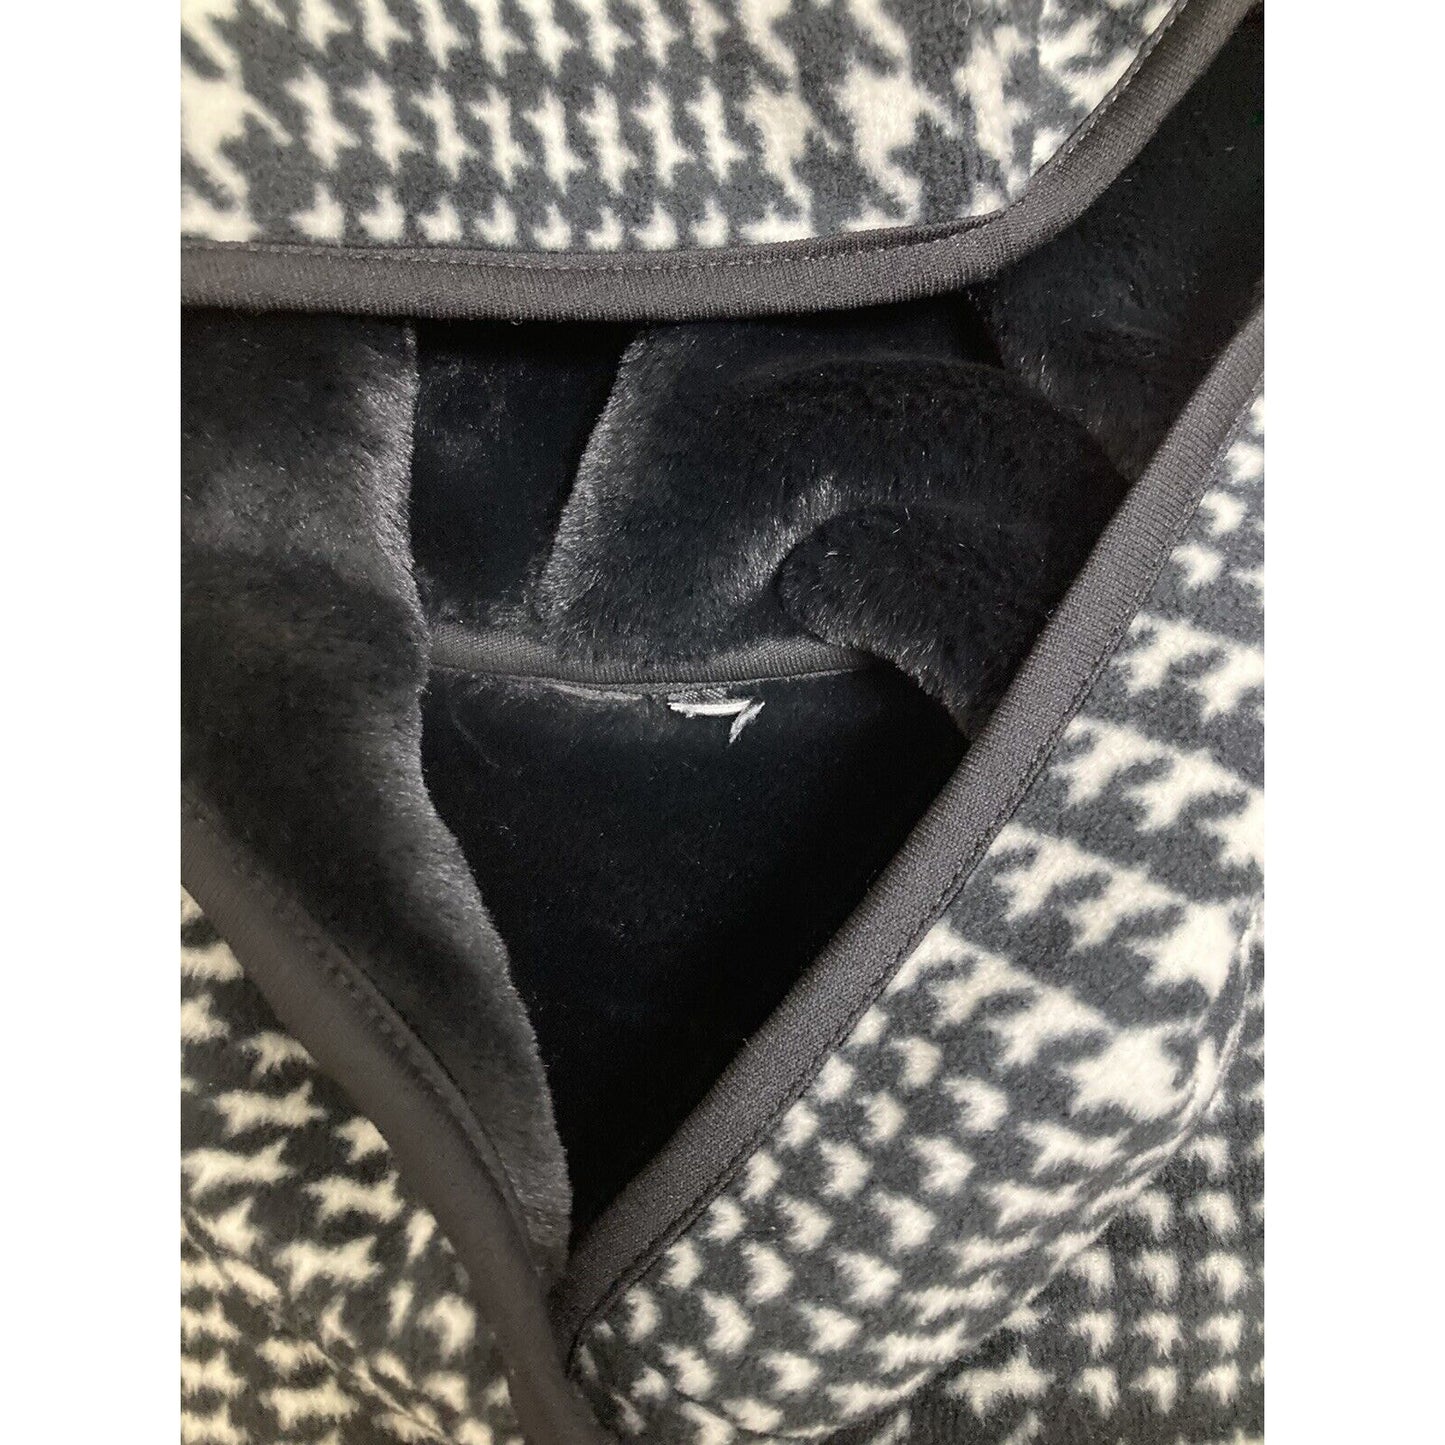 Ike Behar Hooded Houndstooth Coat Black White Fur lining Size Small Fleece